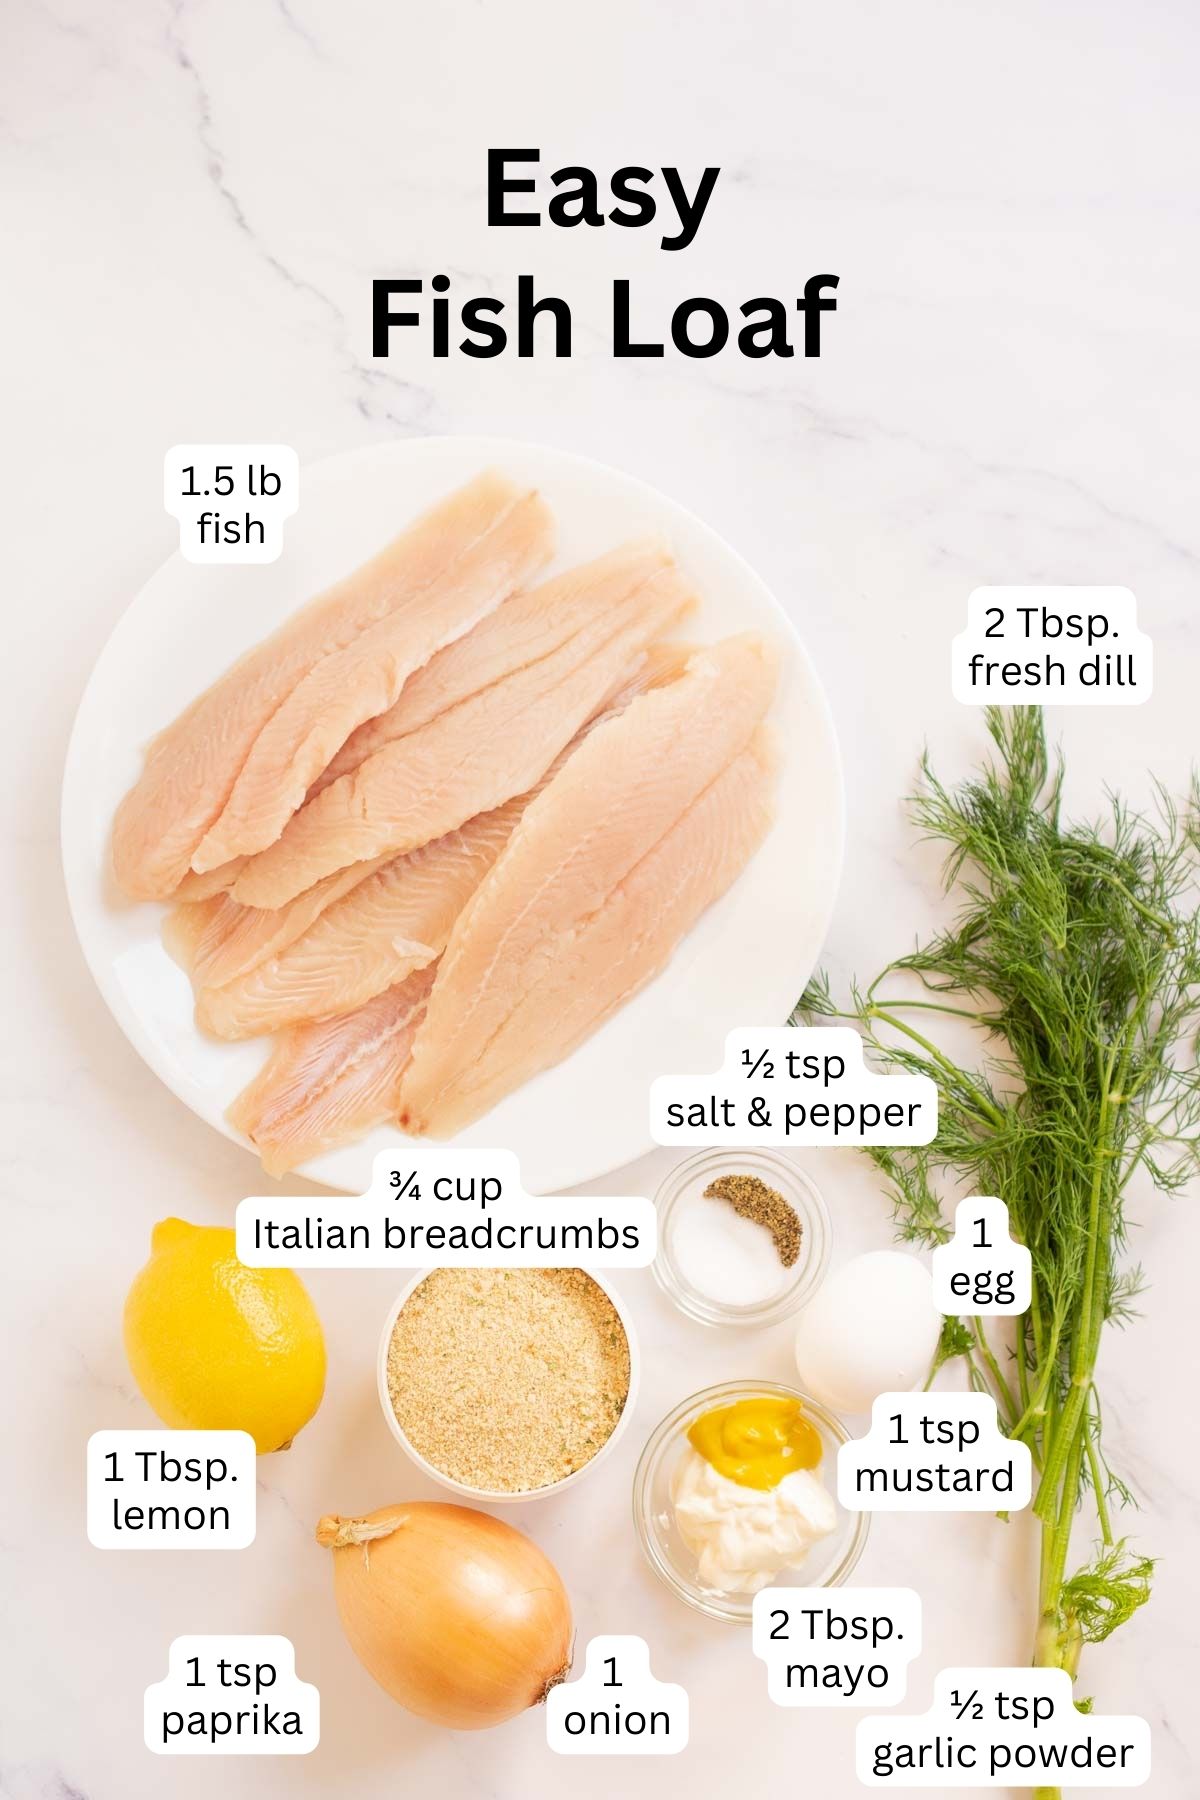 Ingredients for fish loaf